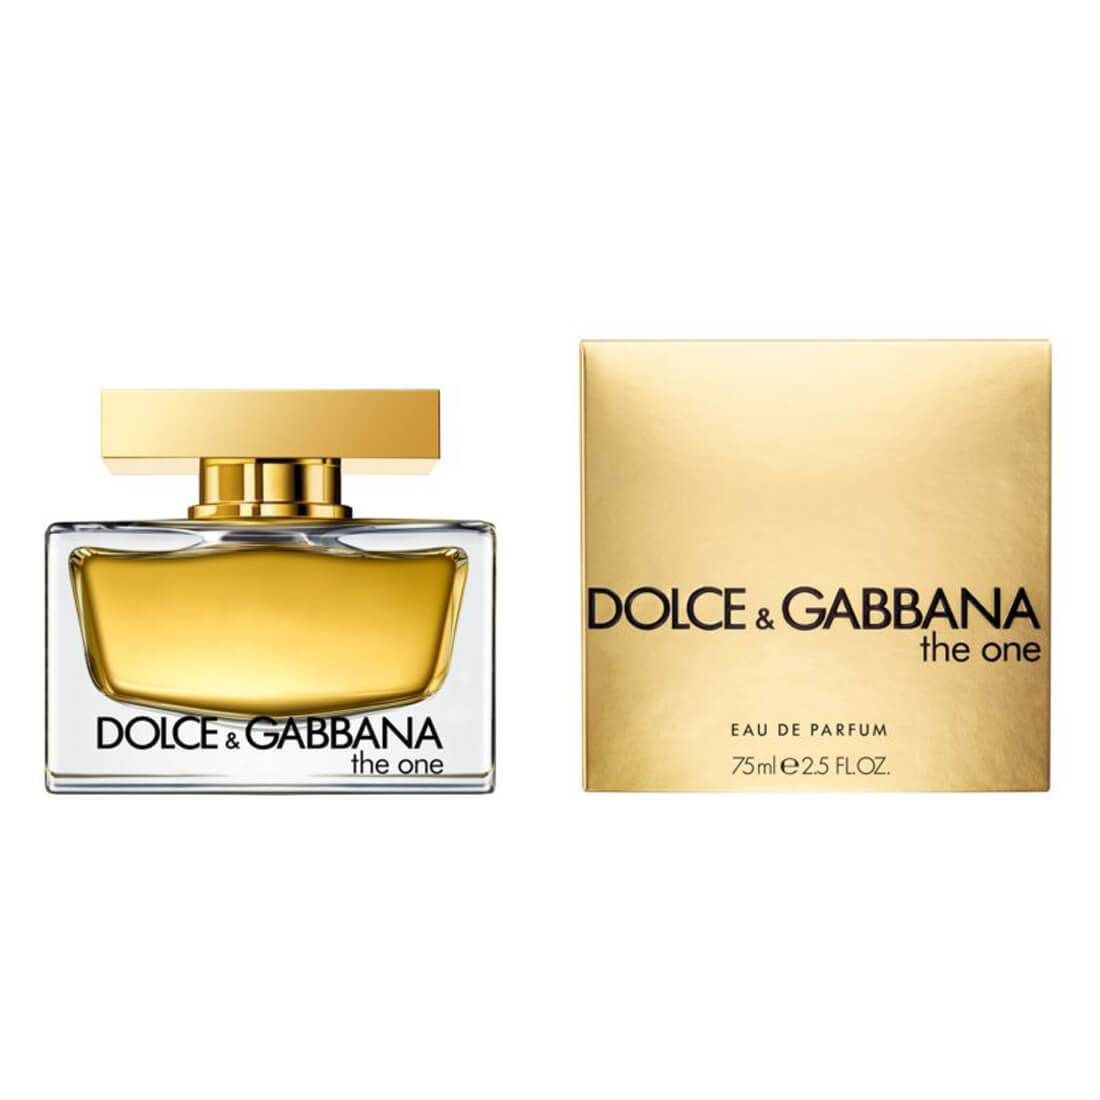 Dolce & Gabbana The One For Women Eau de Parfum - 75ml | Shop Today ...